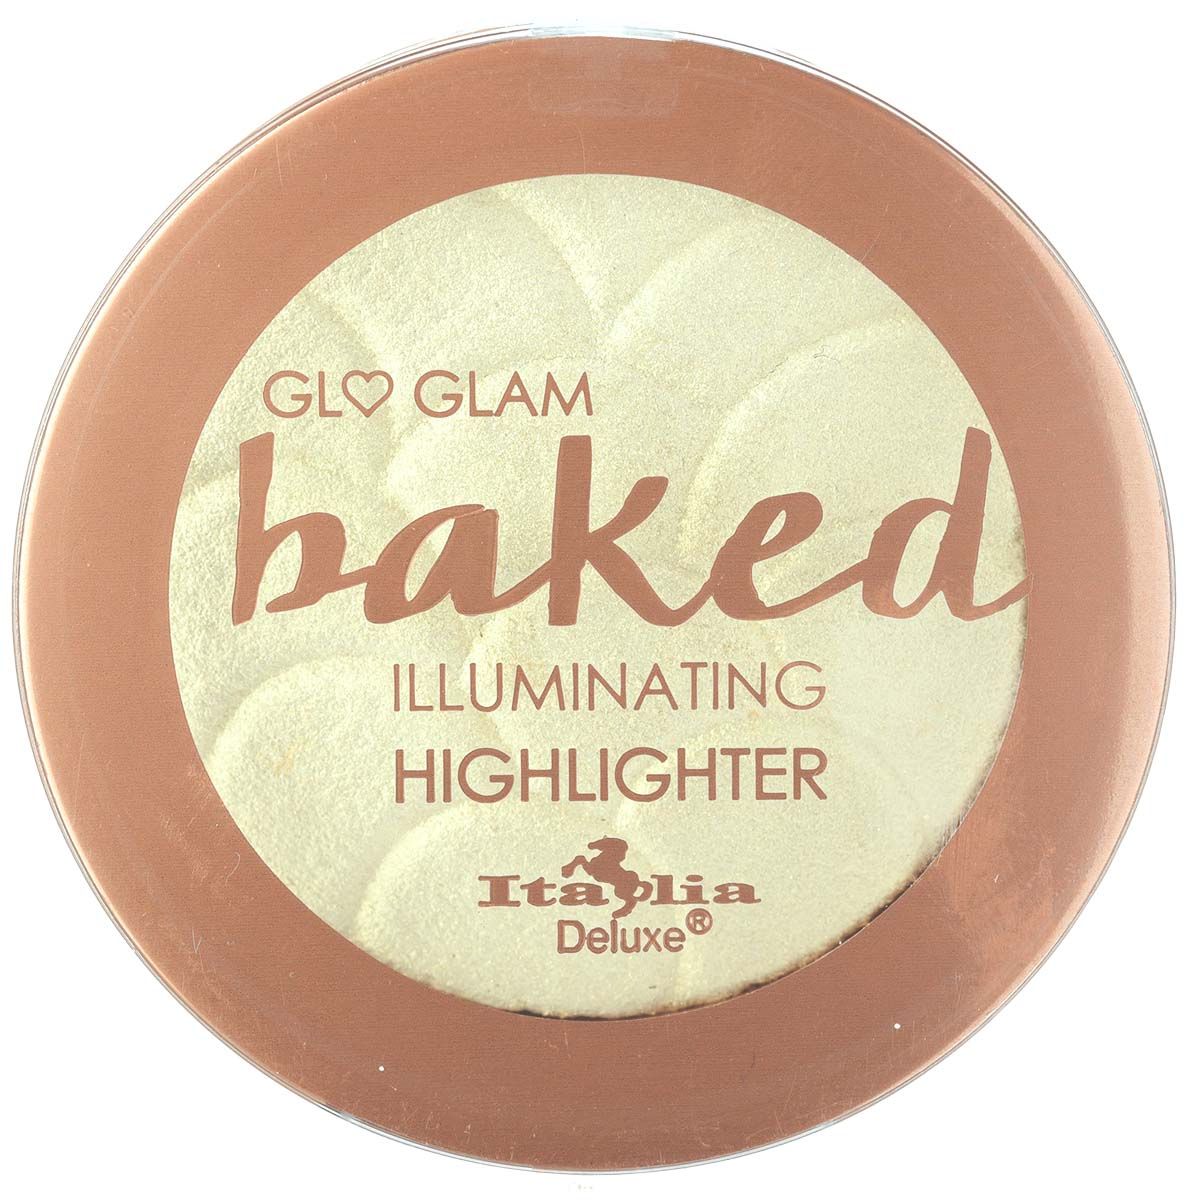 Italia Deluxe Glo Glam Baked Illuminating Highlighter